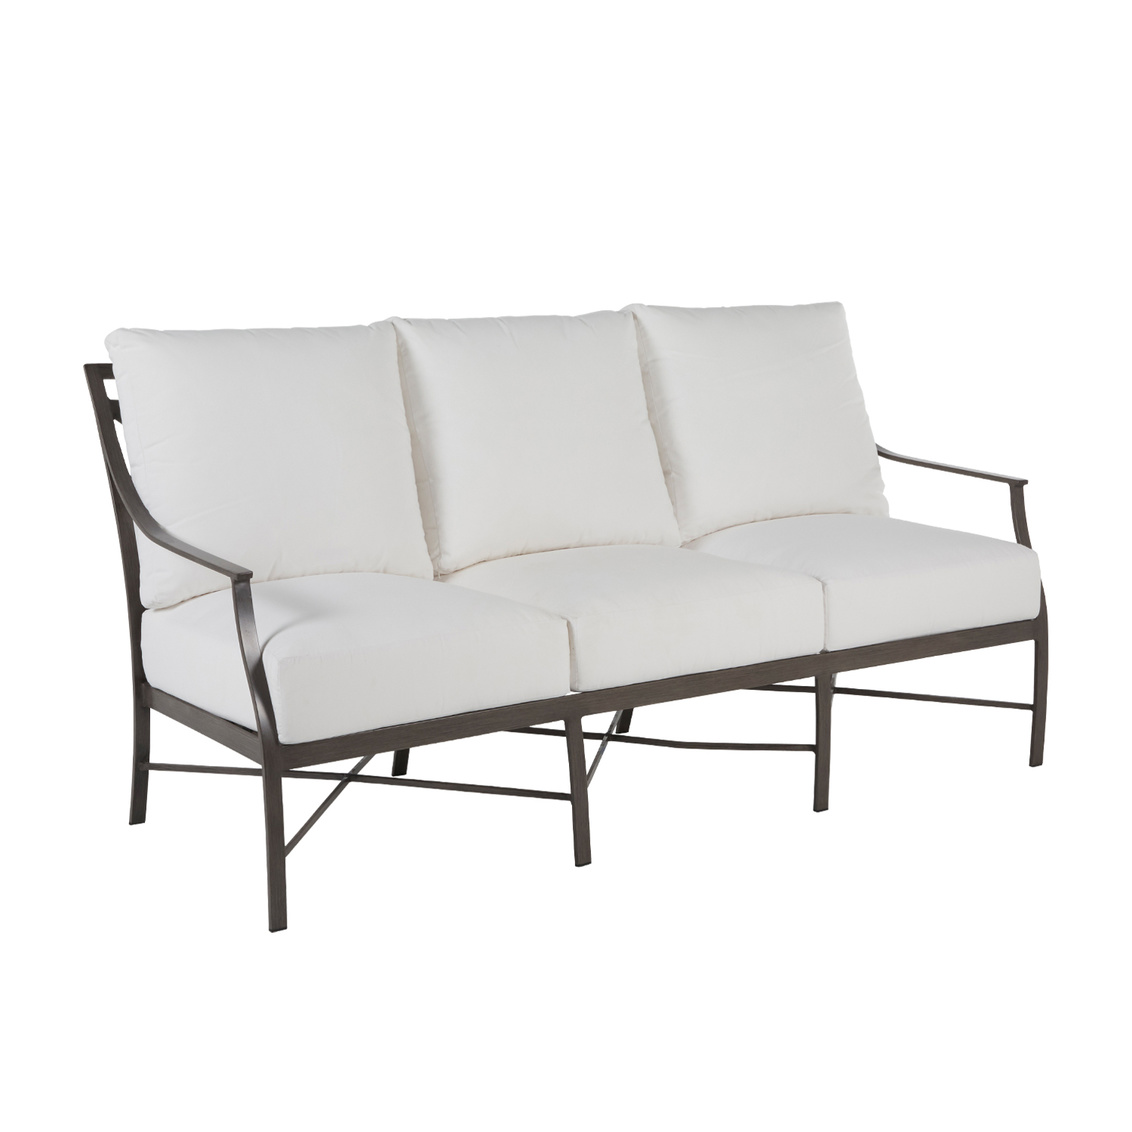 monaco aluminum sofa in slate grey – frame only product image